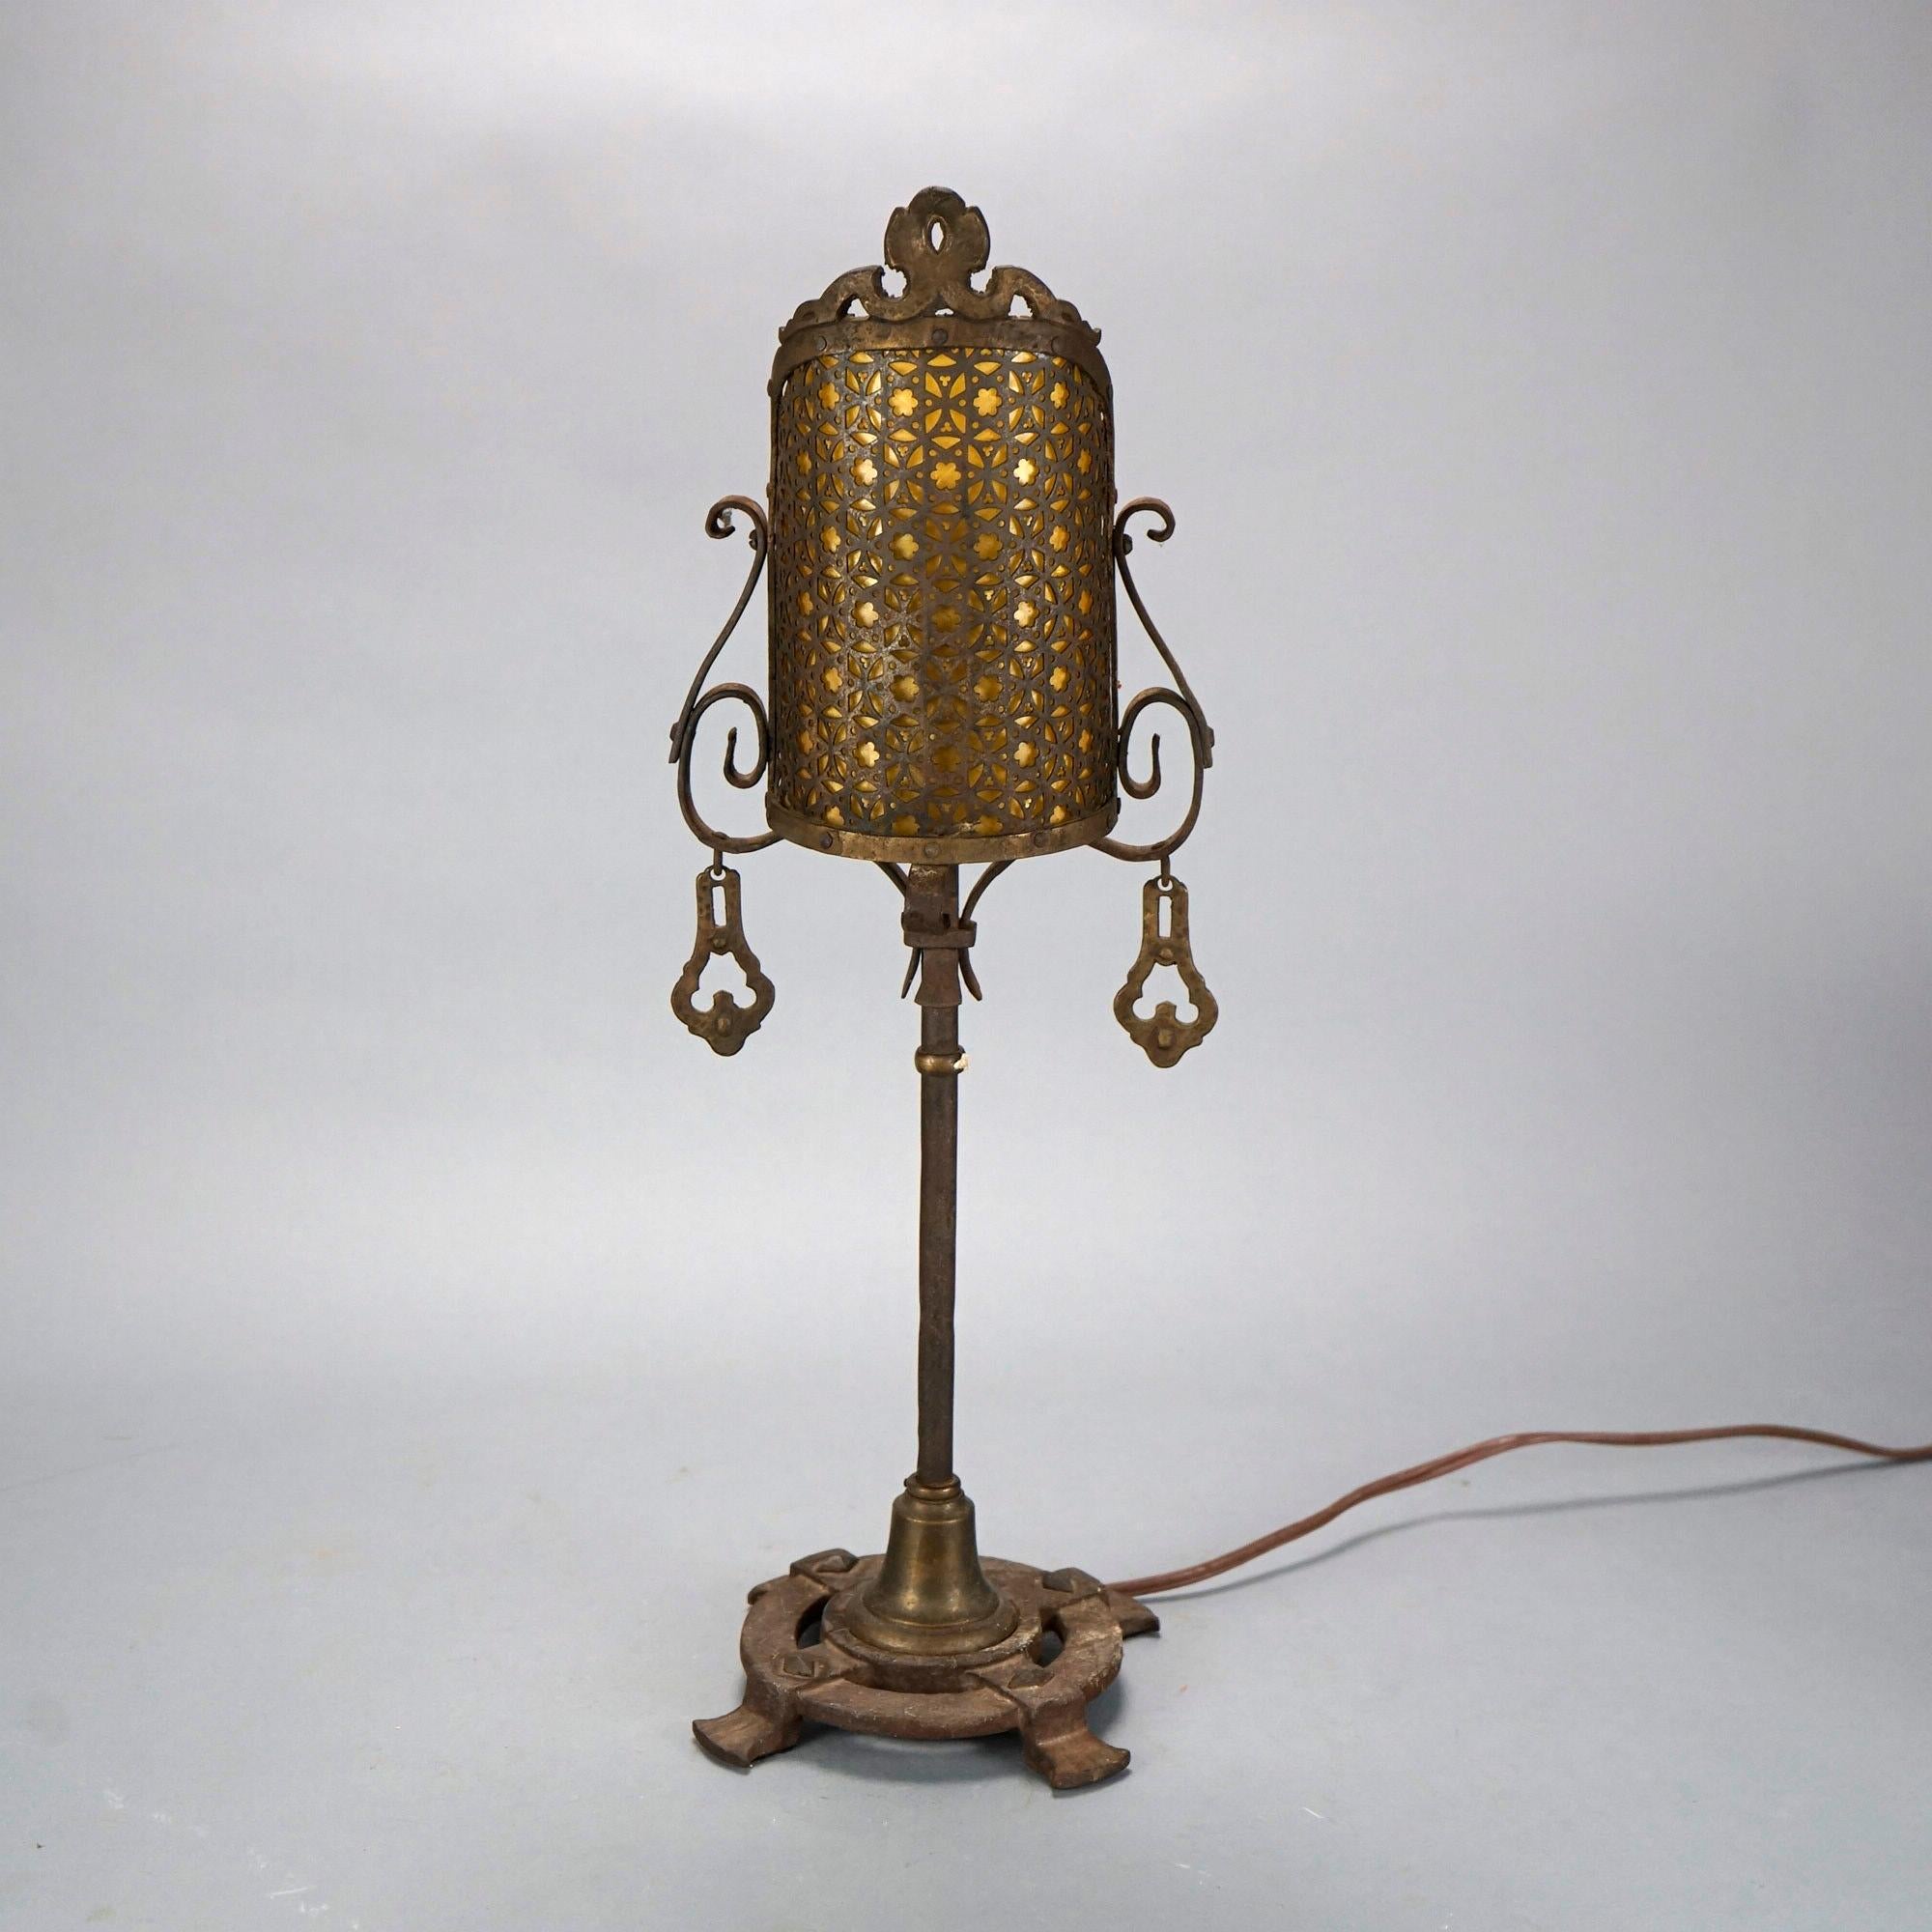 American Antique Arts & Crafts Bronzed & Reticulated Screen Lamps, Moorish Design, C1920